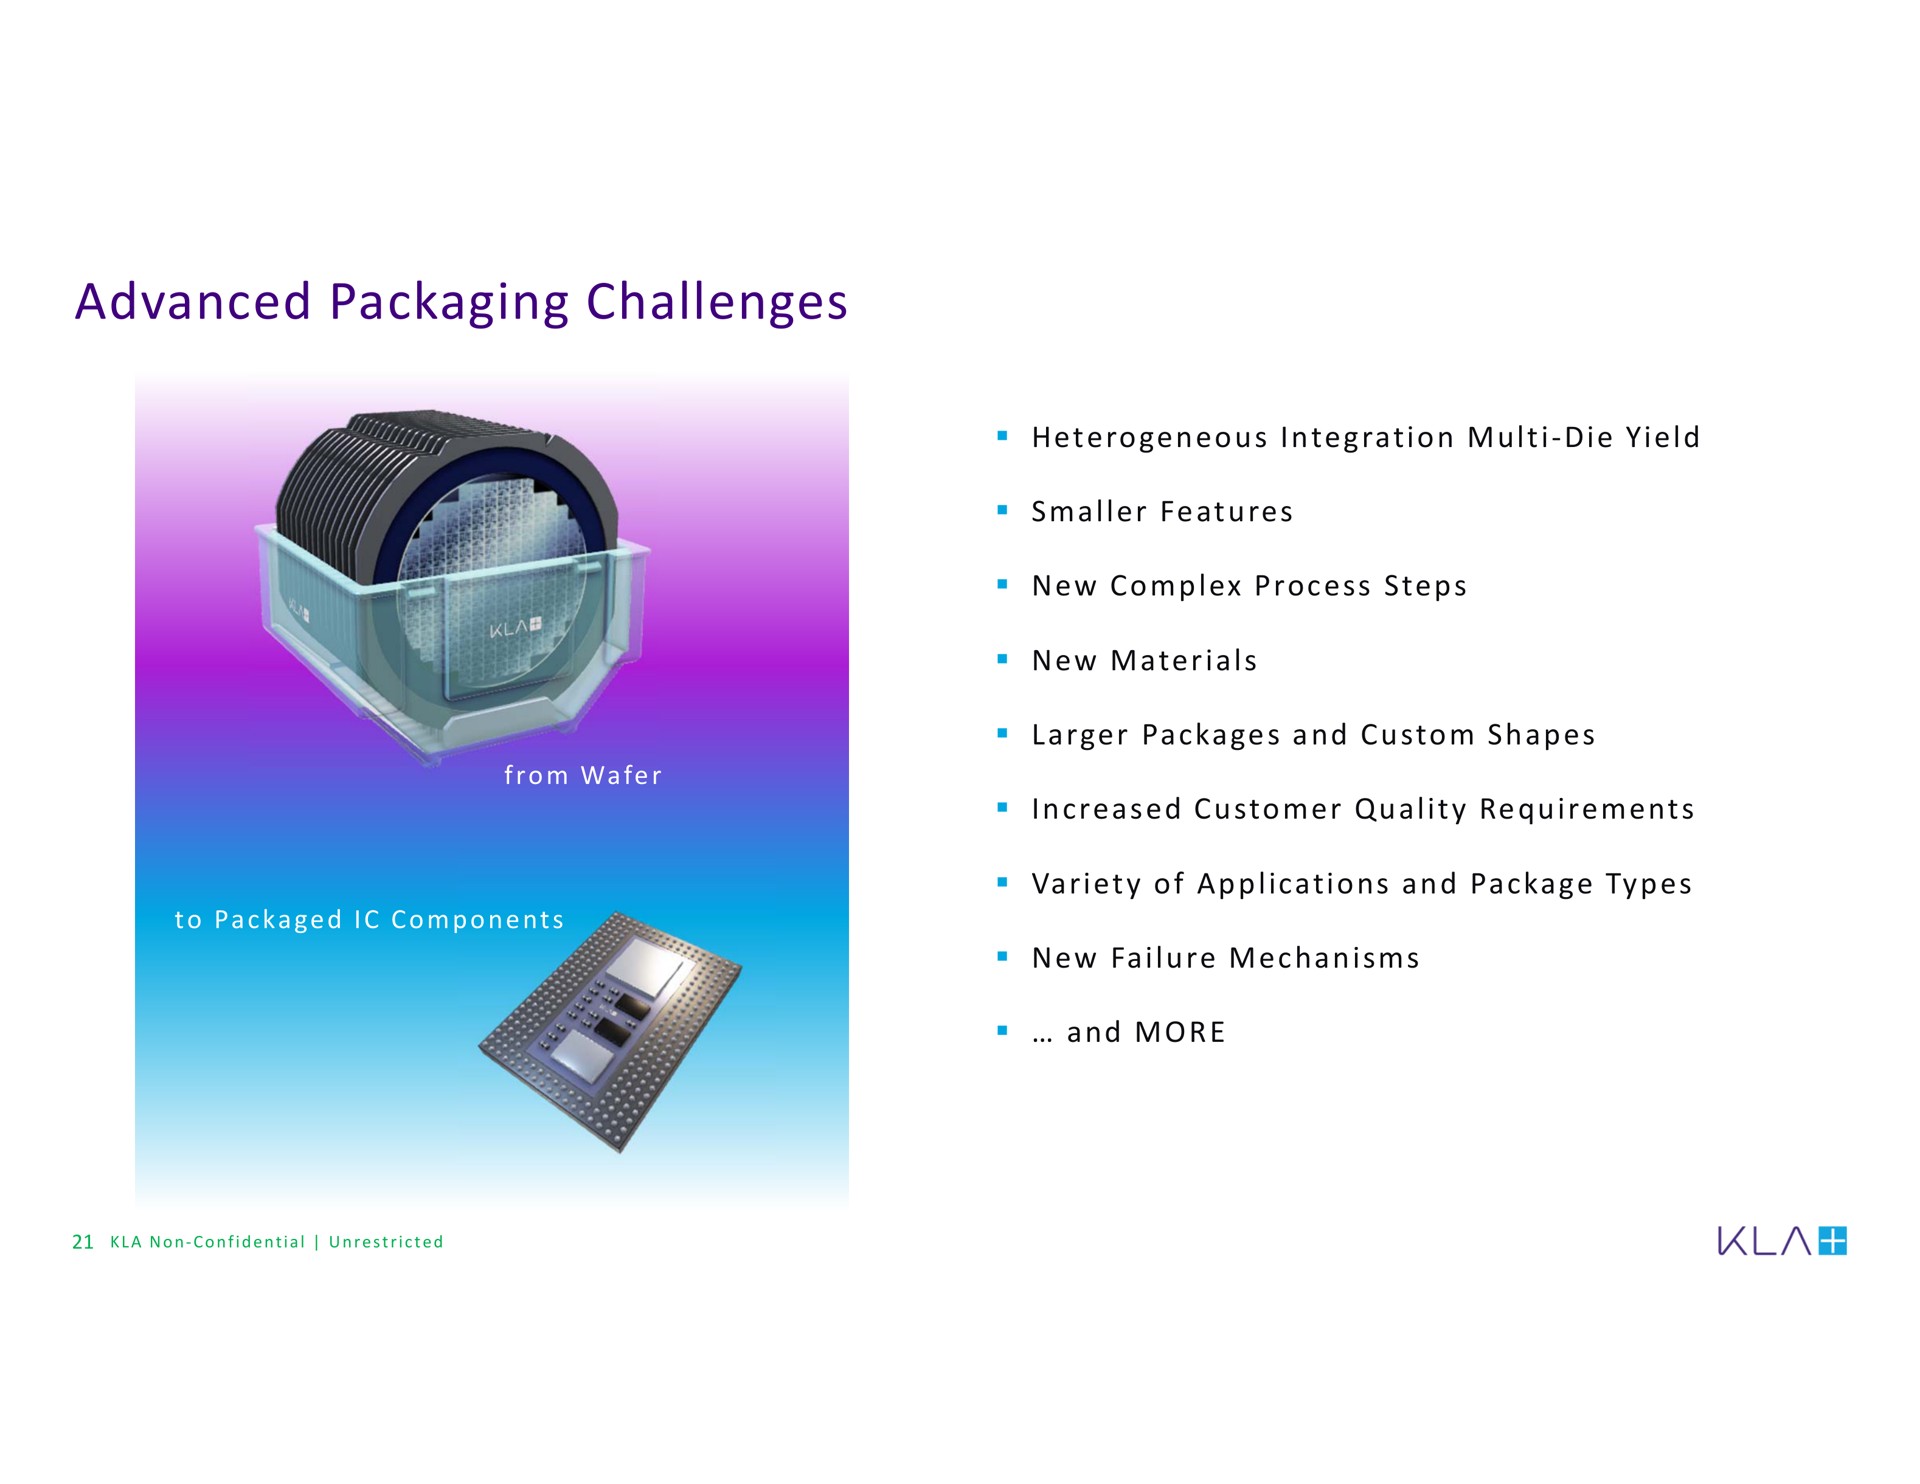 advanced packaging challenges | KLA